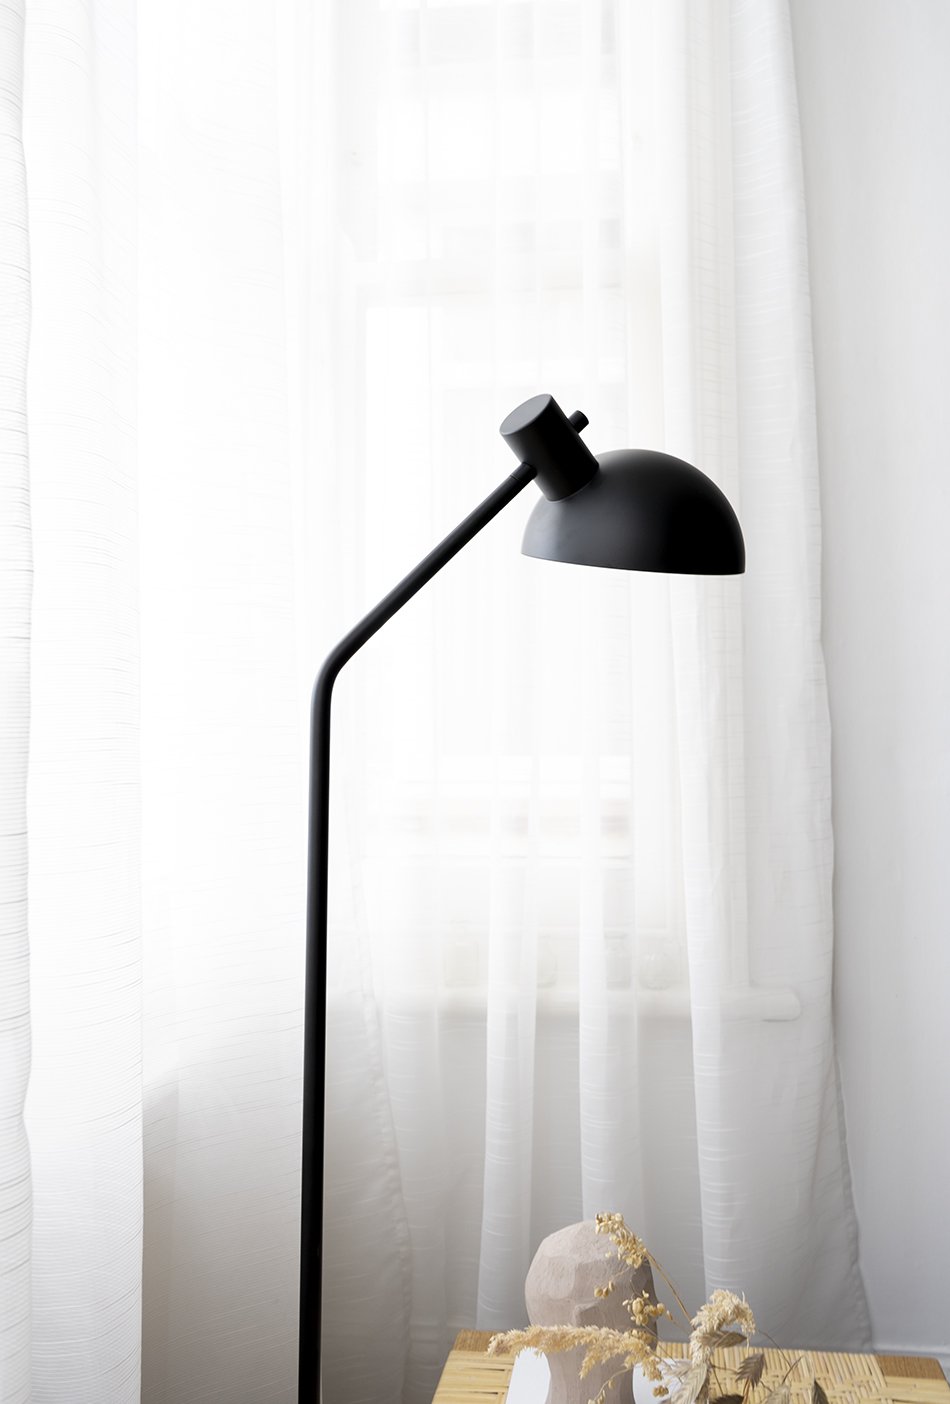 A simple minimalist black M0320 floor lamp designed by Mads Odgård for Carl Hansen & Søn.